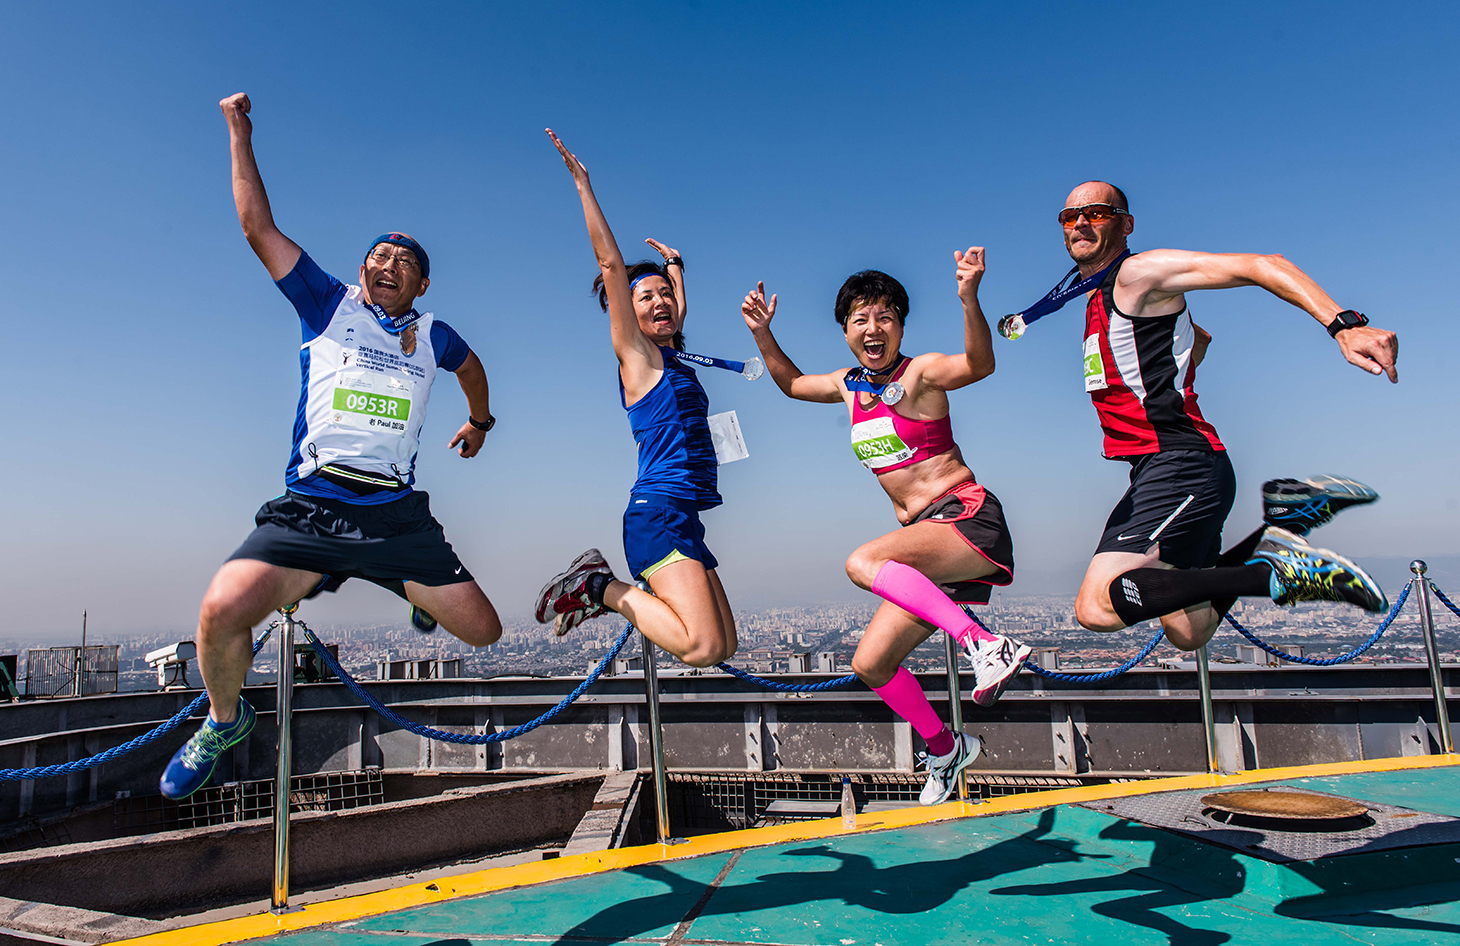 The joy of the finish line. China World Summit Wing Hotel Vertical Run. ©Sporting Republic 